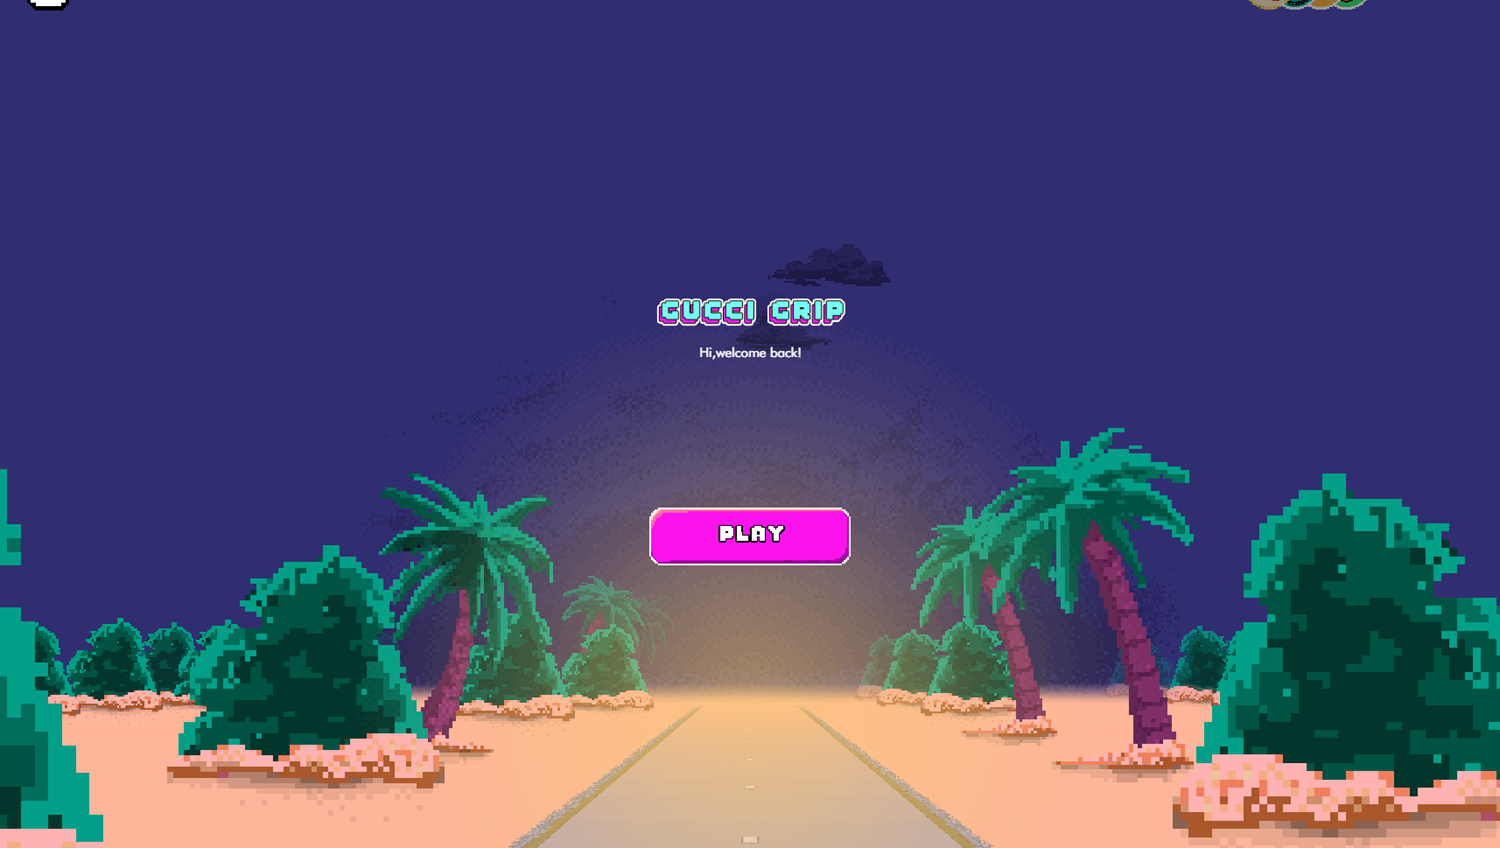 Gucci Grip Game Welcome Screen Screenshot.